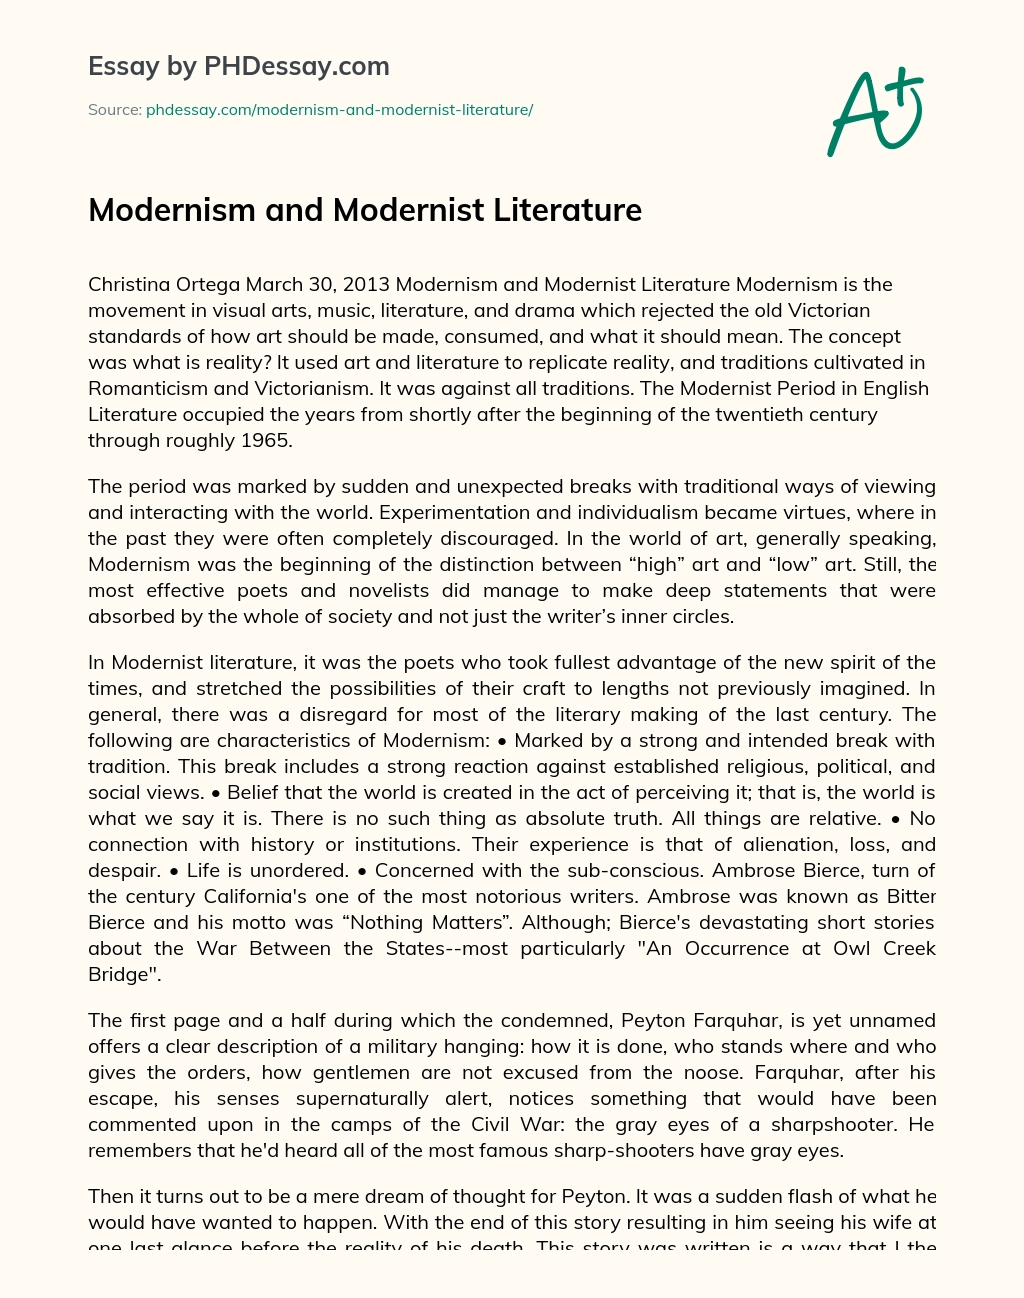 Modernism and Modernist Literature essay